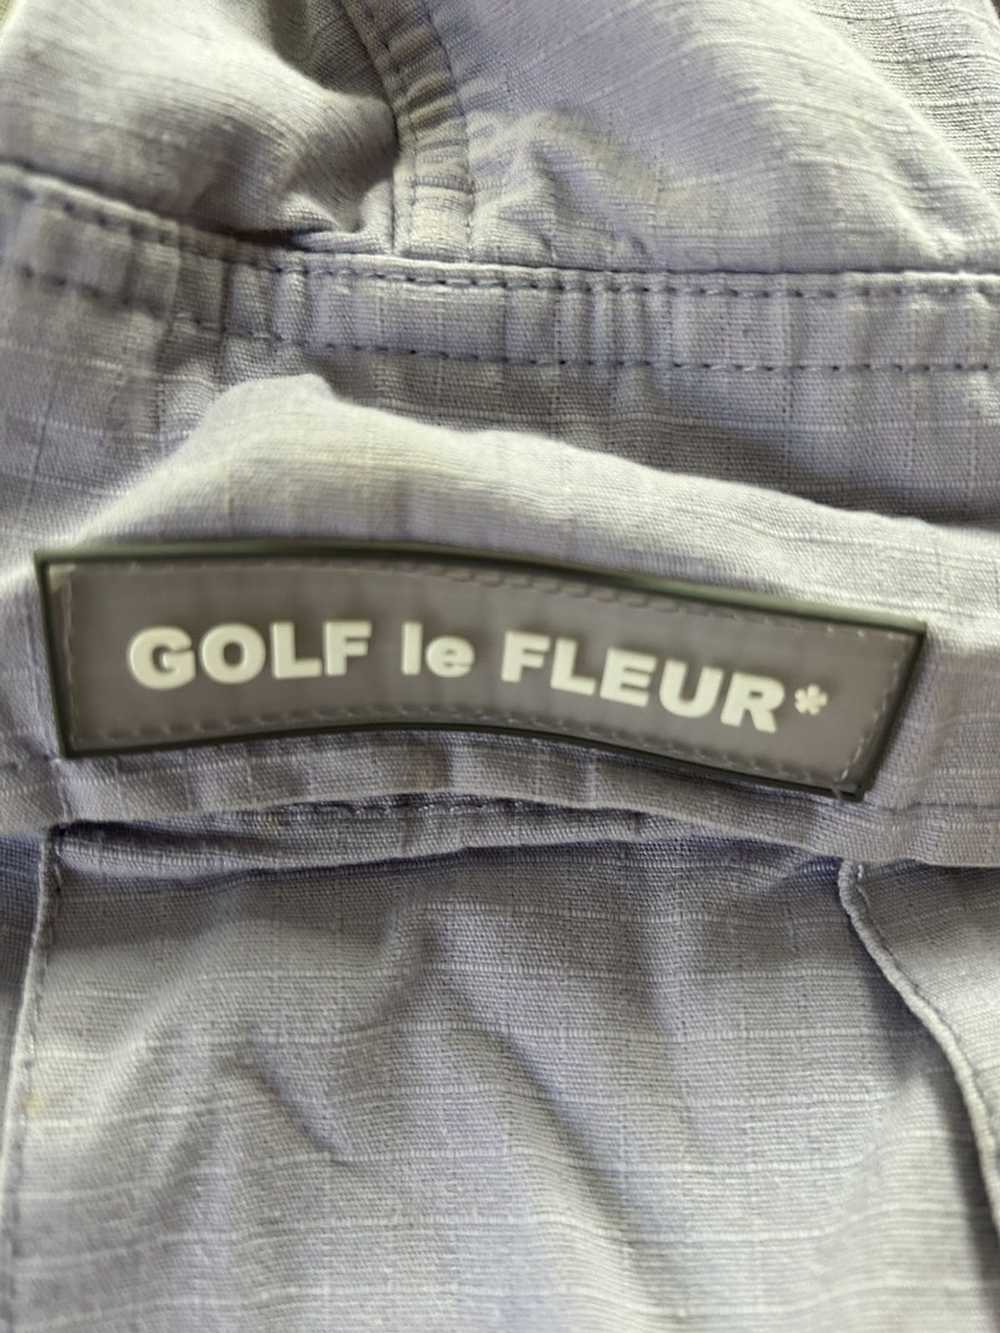 Golf Wang Golf Wang Cargo Pants - image 3